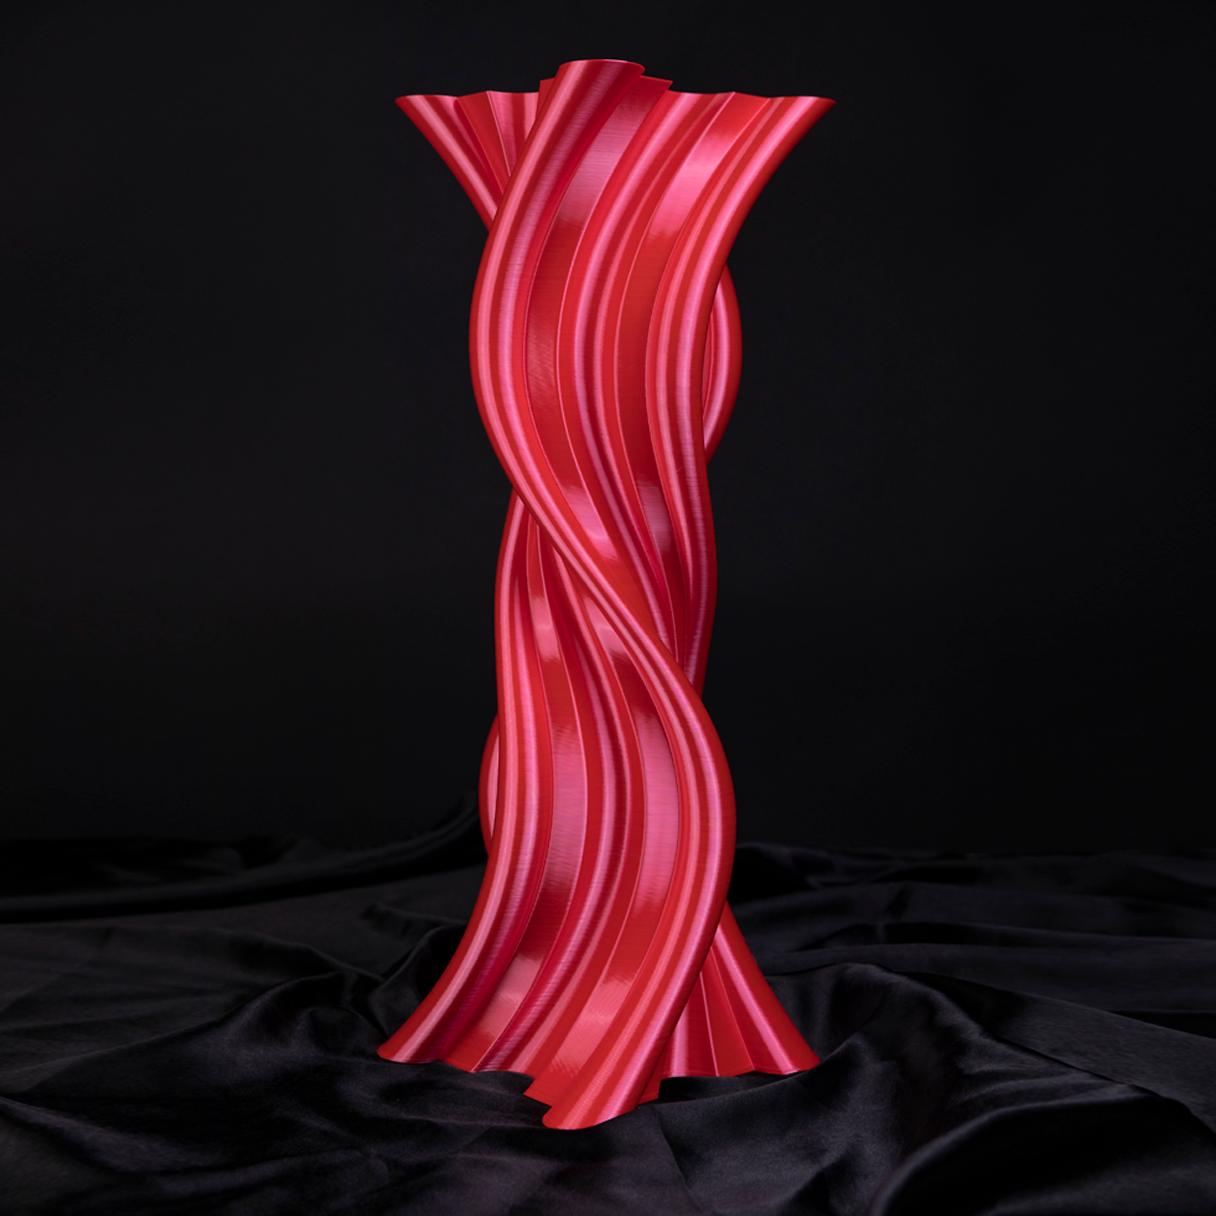 Postmoderne Tersicore, vase-sculpture rouge contemporain durable